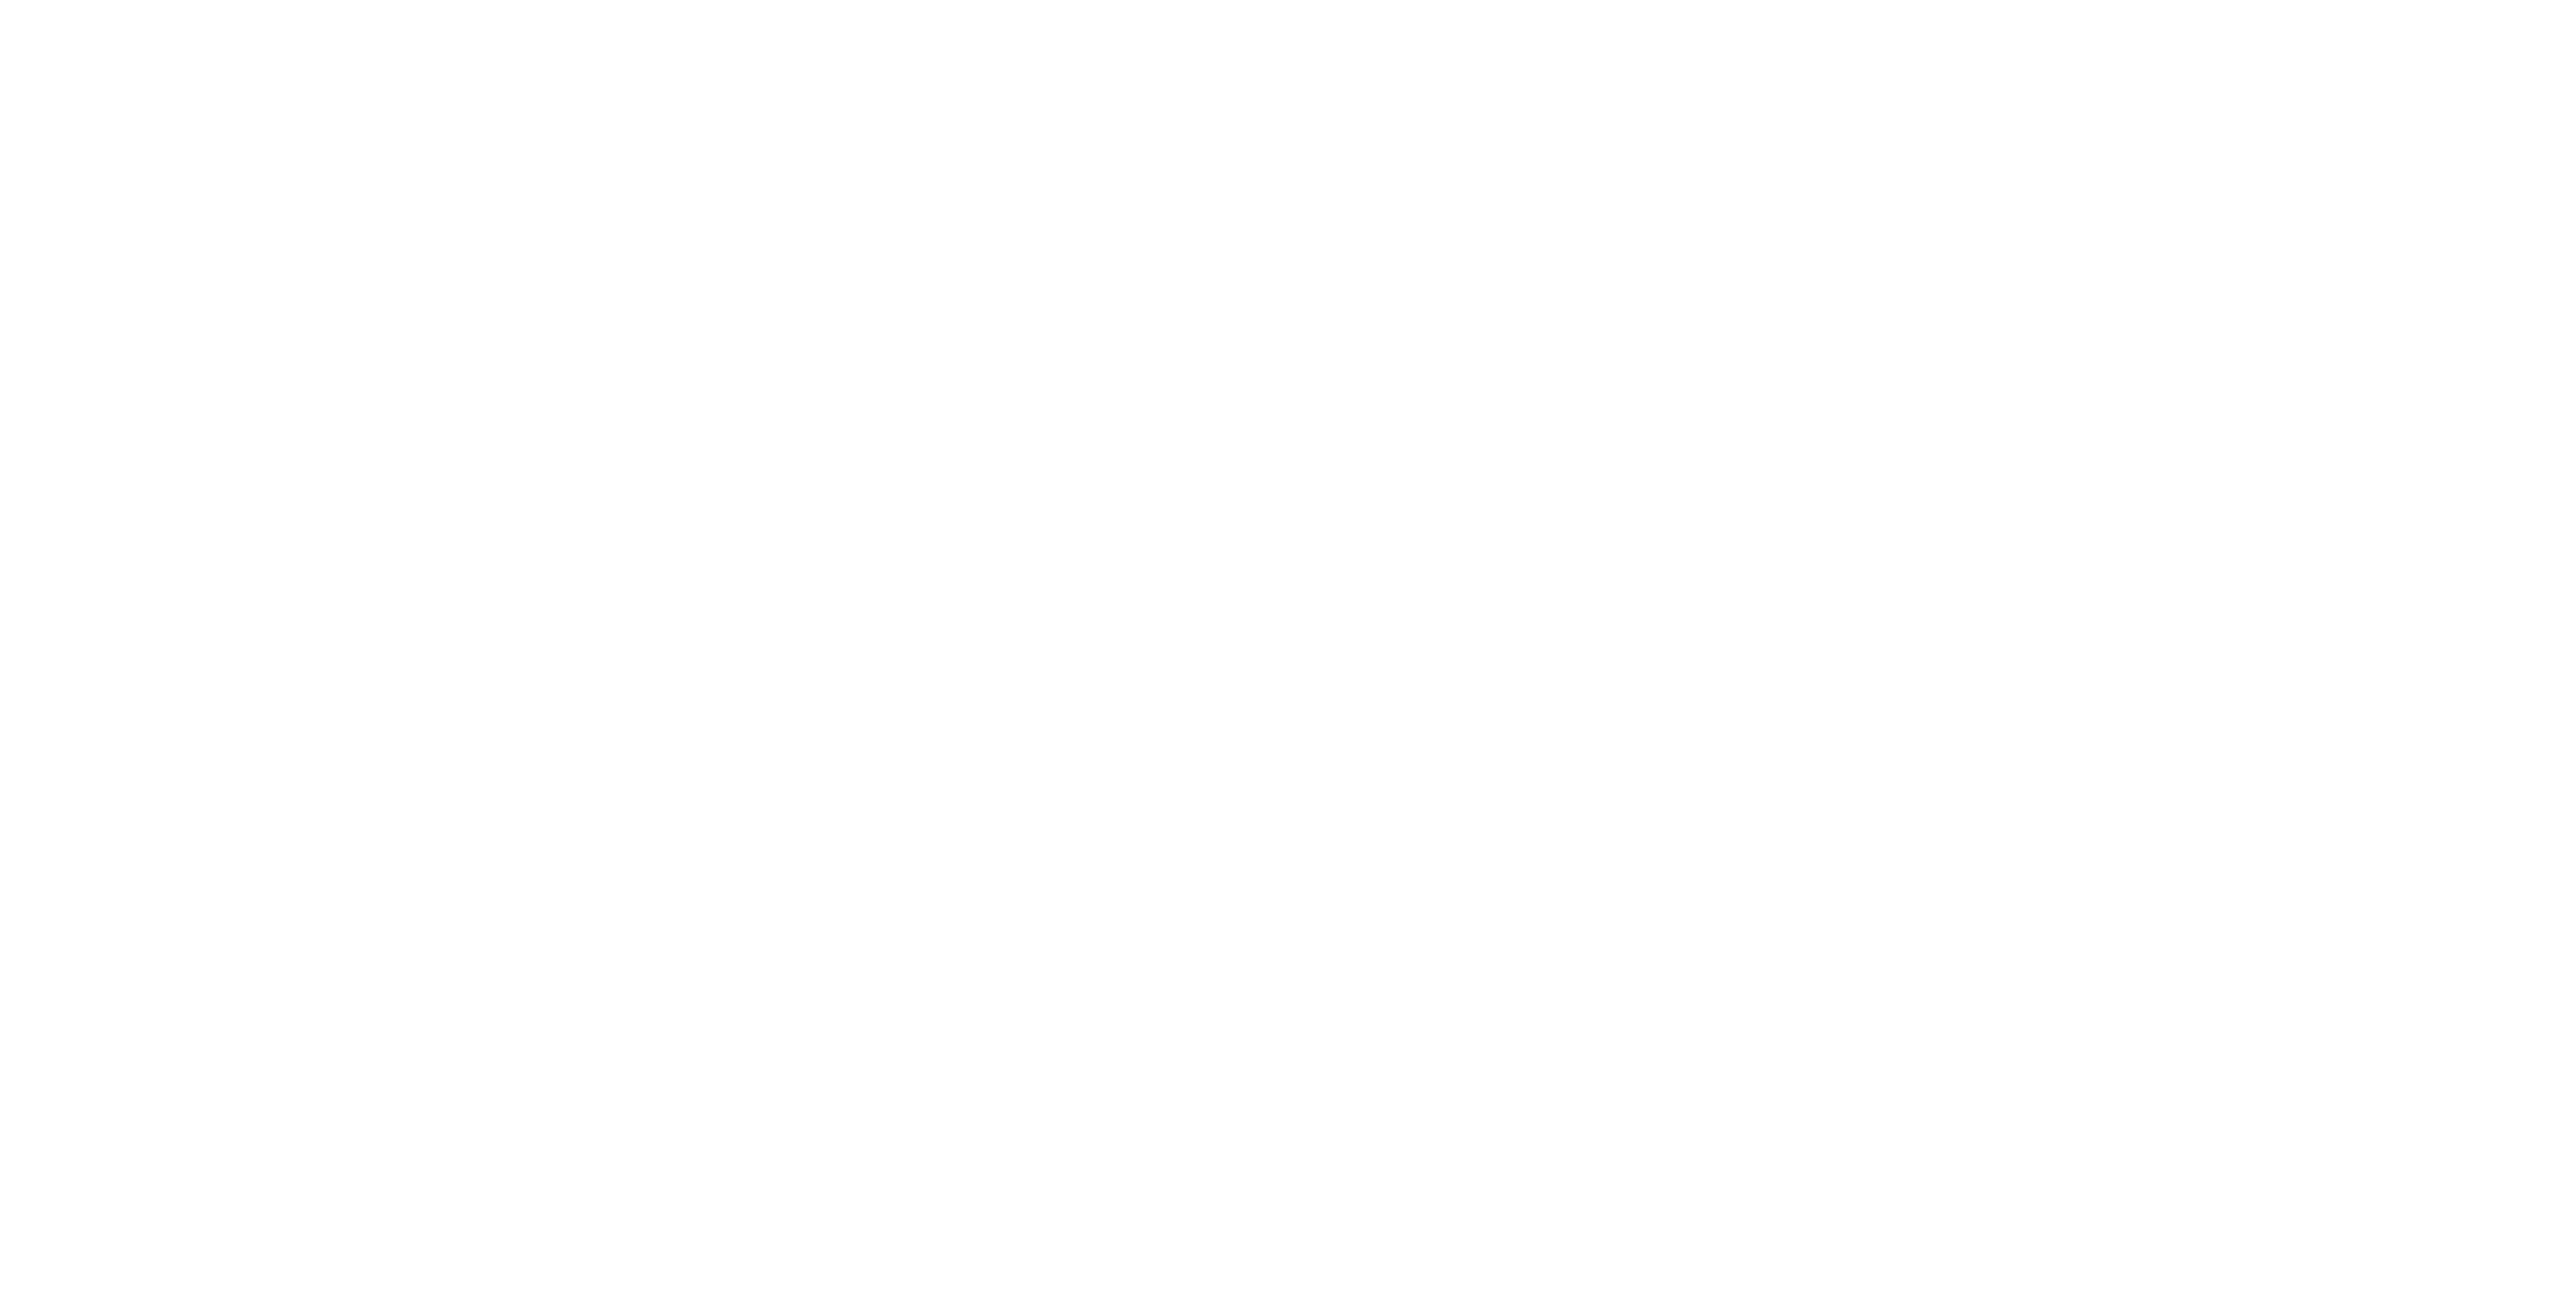 2018 Open Data Challenge